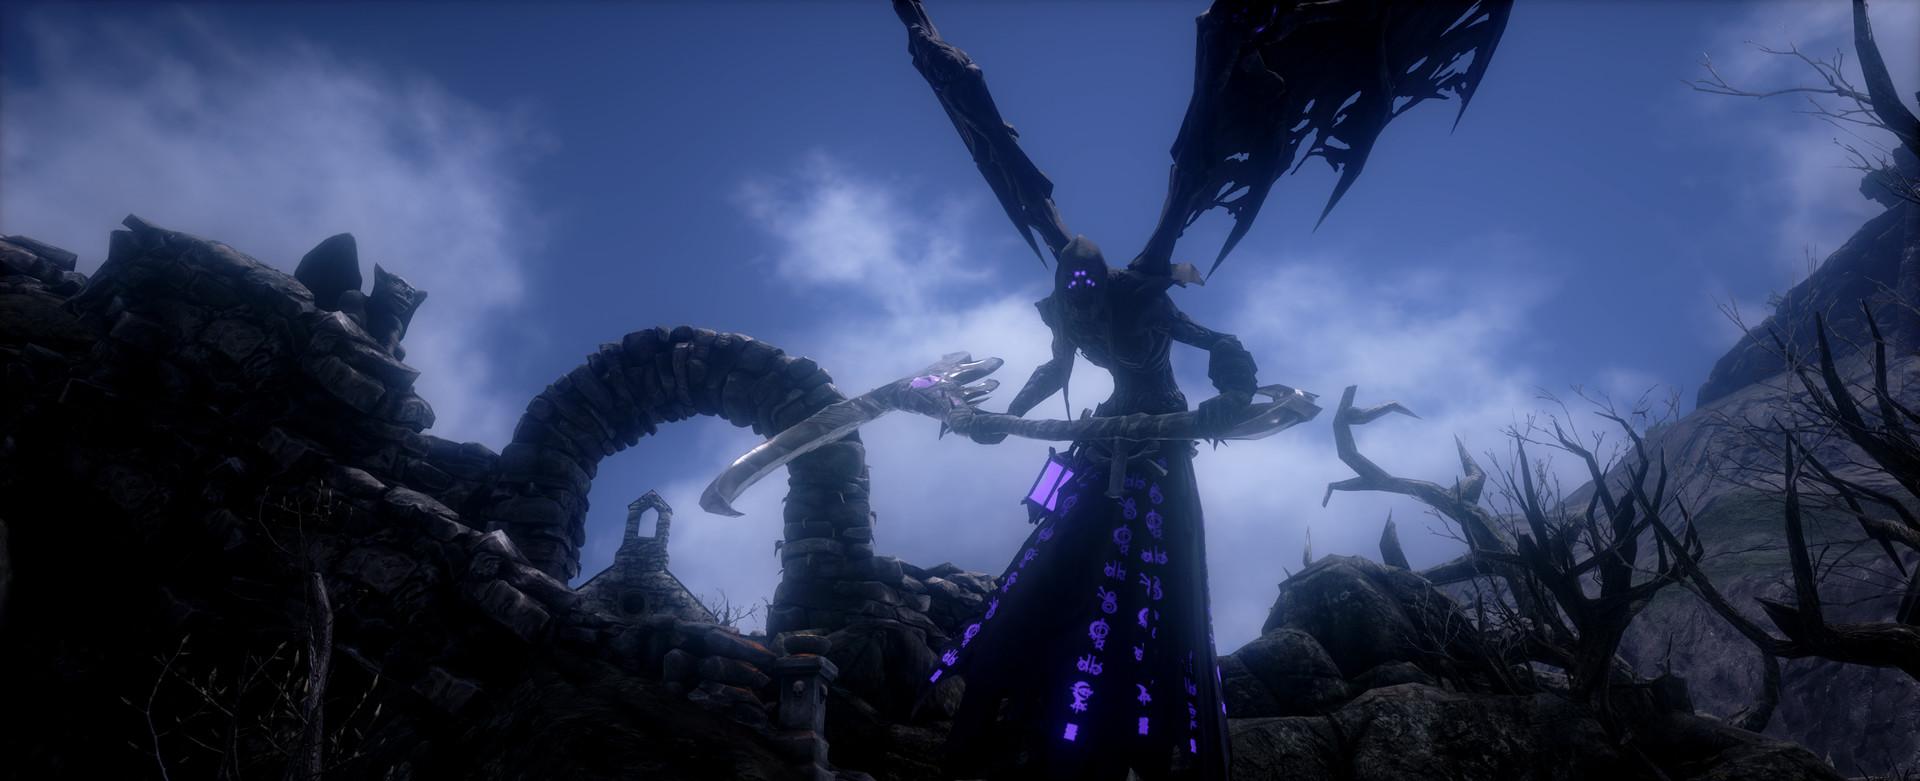 Screenshot №17 from game Dark and Light